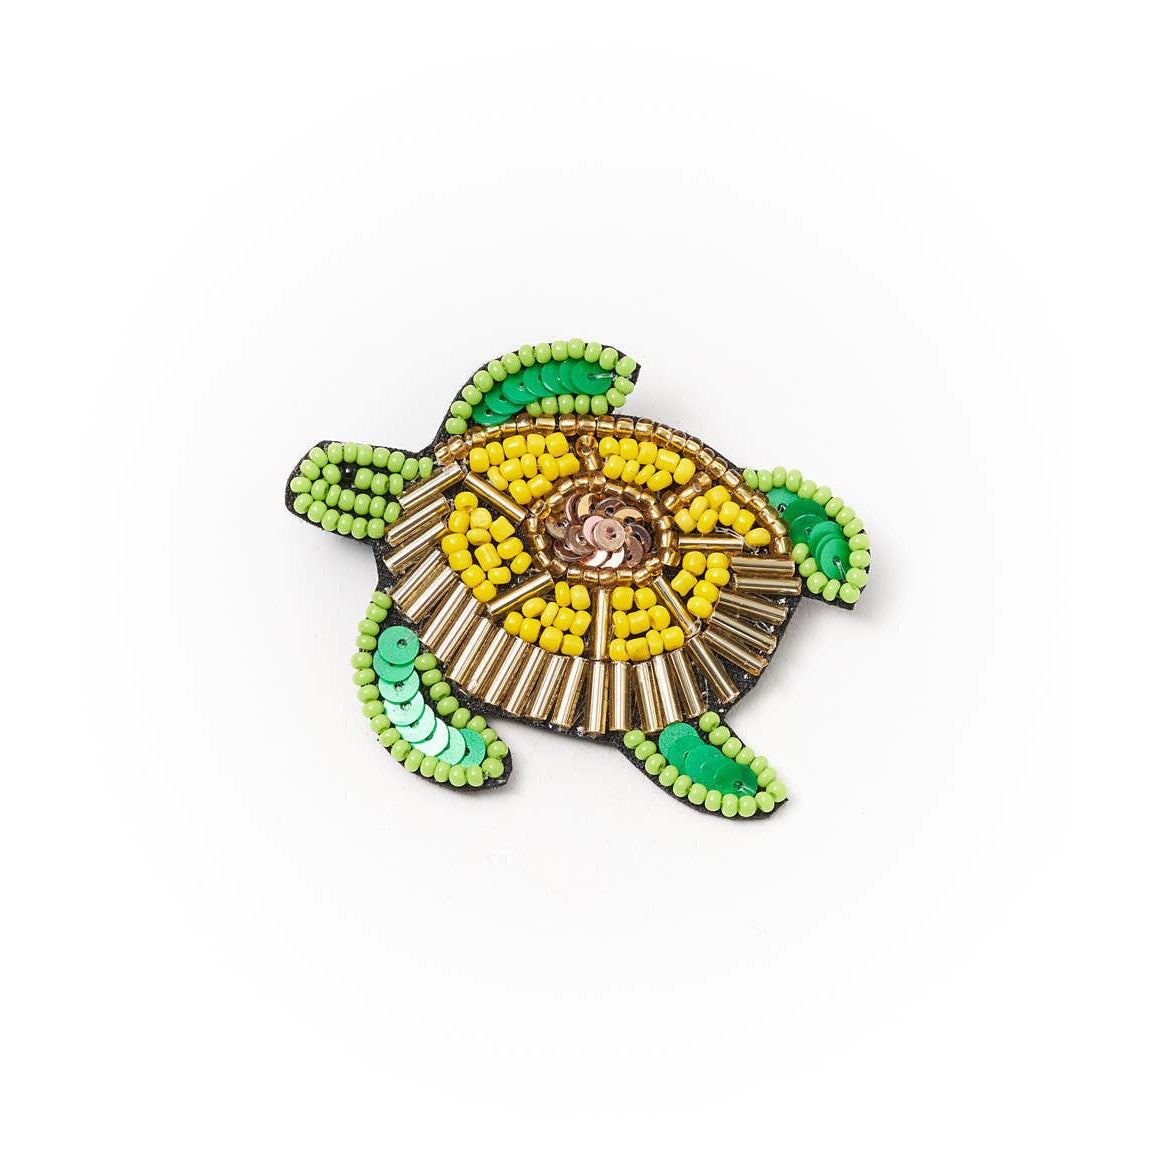 Bala Mani Beaded Turtle Brooch Pin - Handmade, Fair Trade